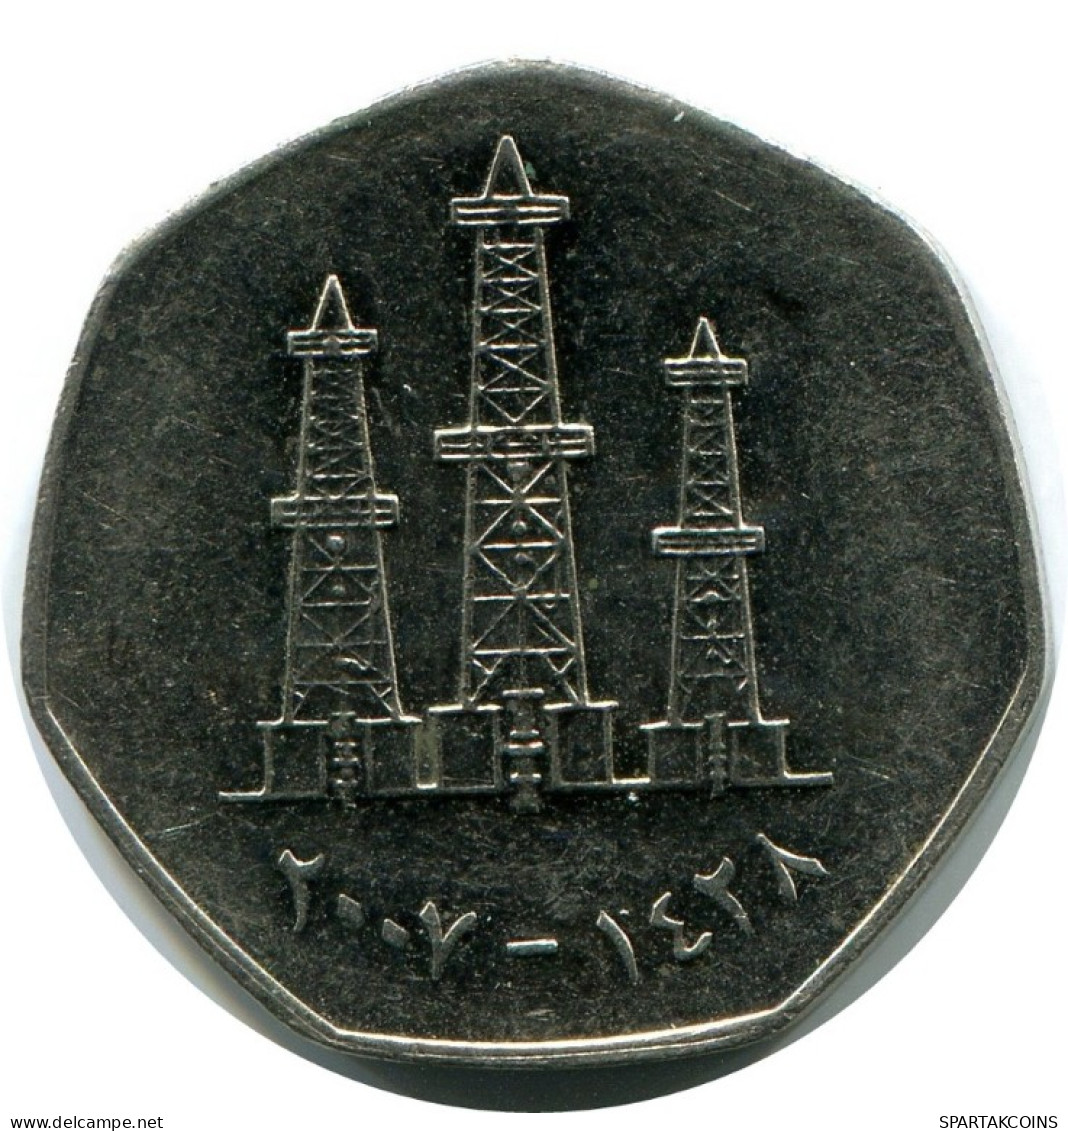 50 FILS 2007 UAE UNITED ARAB EMIRATES Islamic Coin #AK195.U.A - Emiratos Arabes